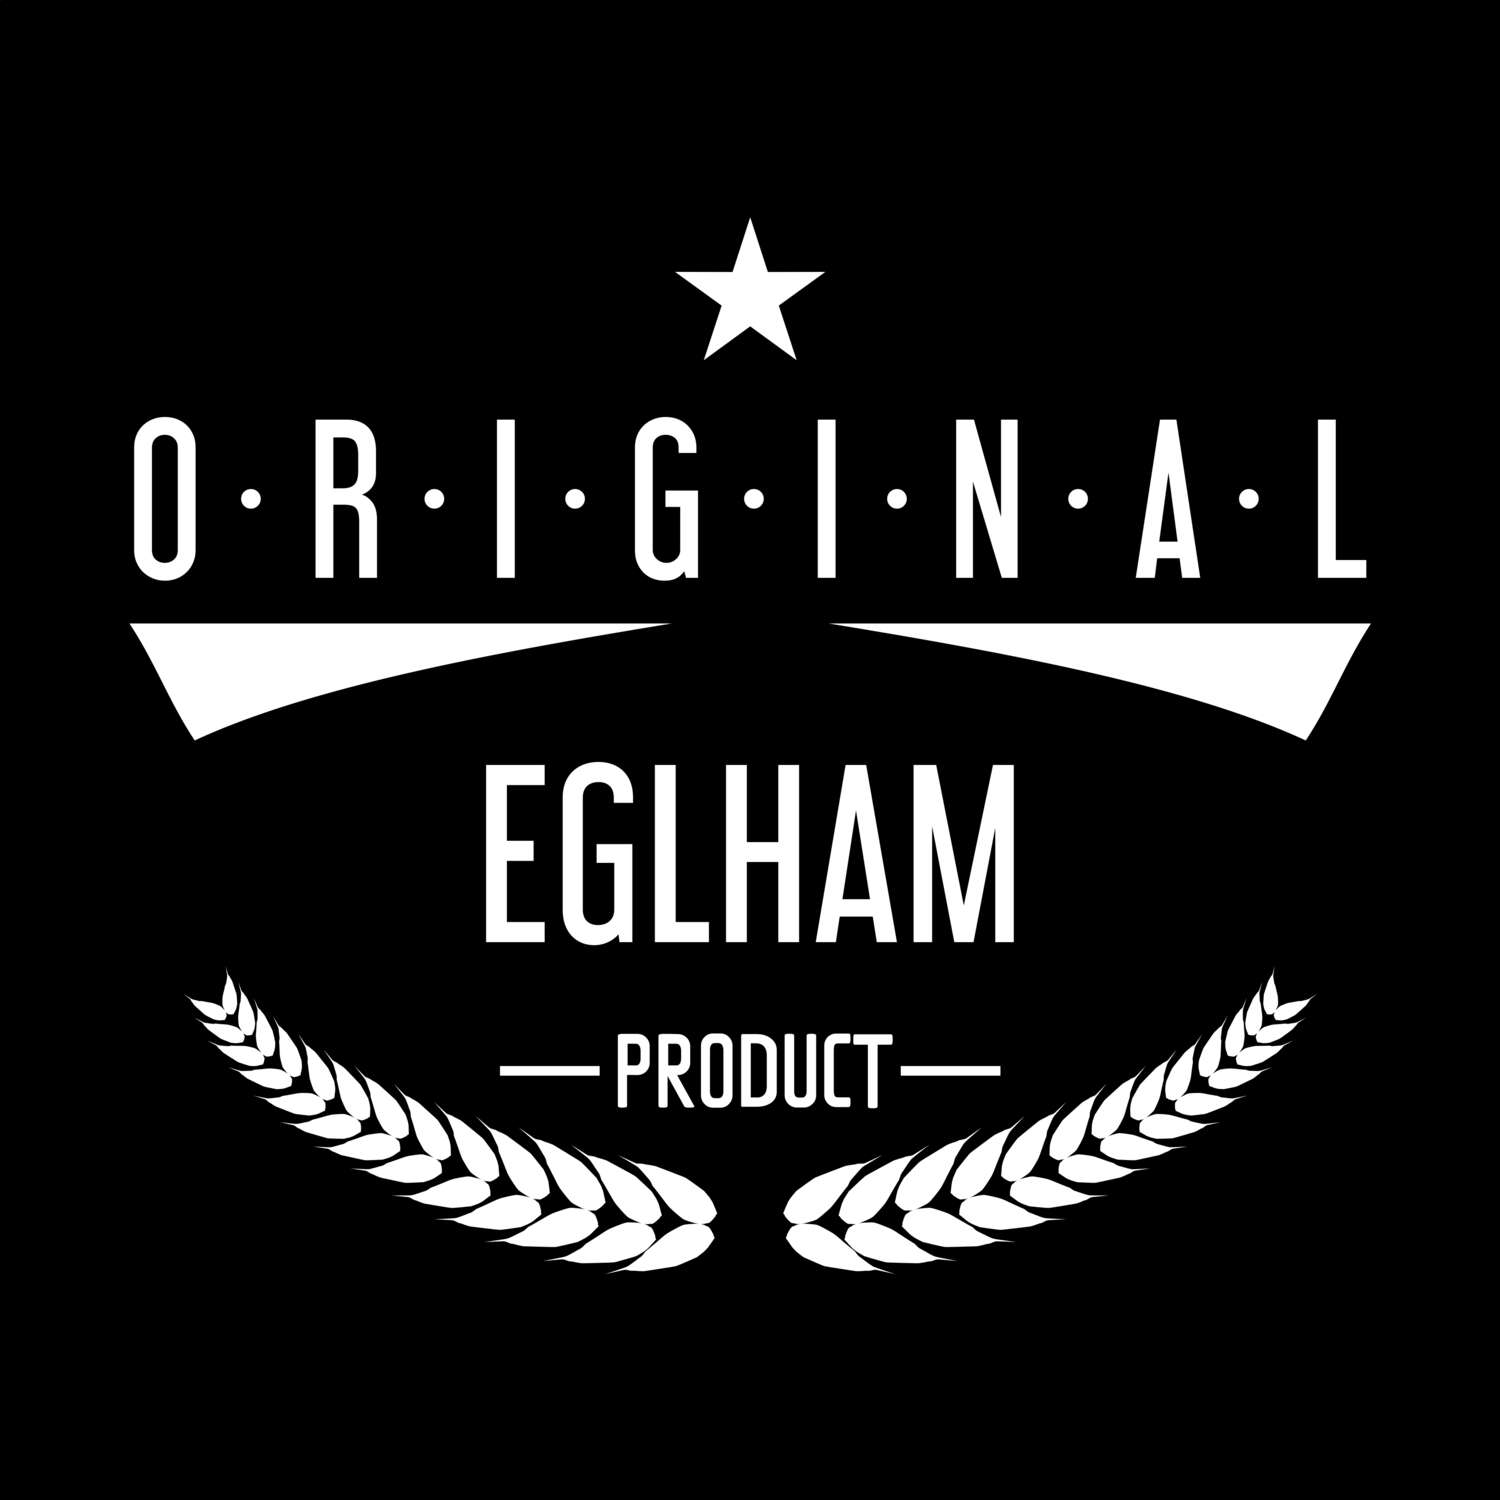 Eglham T-Shirt »Original Product«